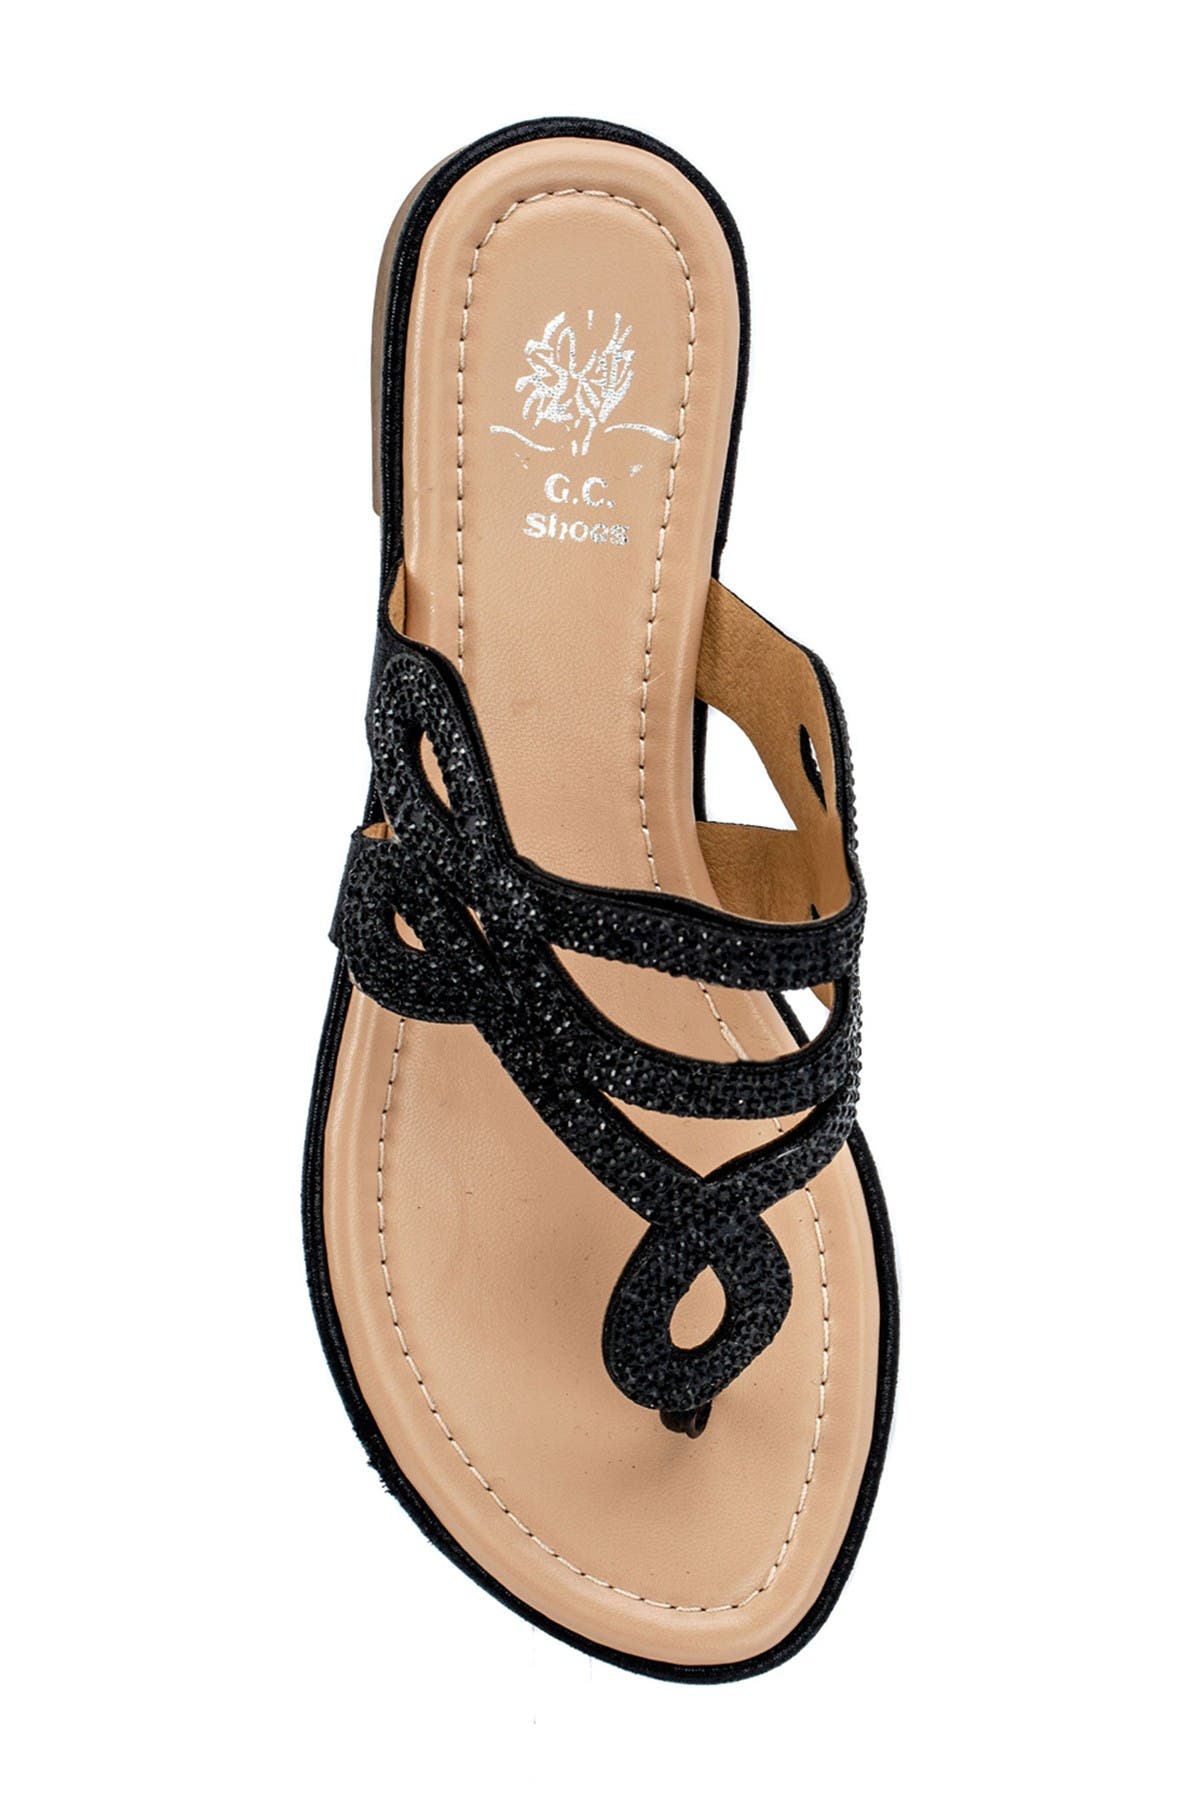 GC Shoes | Amelia Rhinestone Thong Toe Flat Sandal | Nordstrom Rack